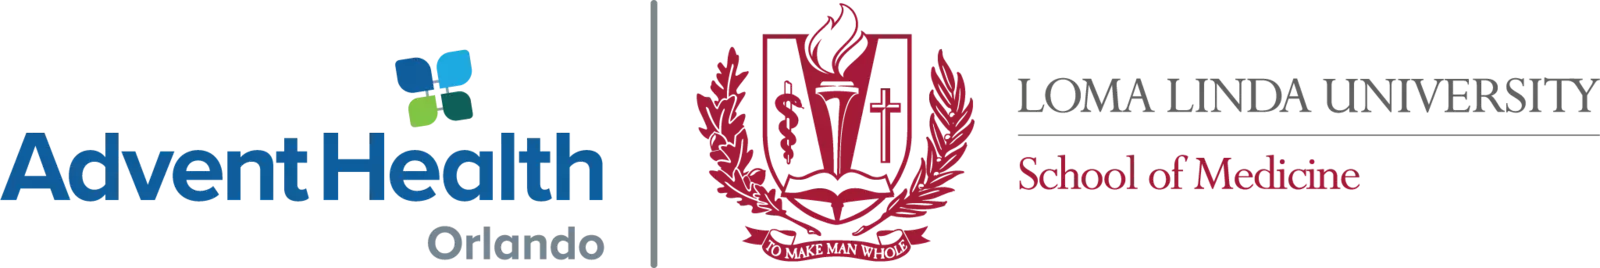 Loma Linda University School of Medicine - AdventHealth Orlando campus logo